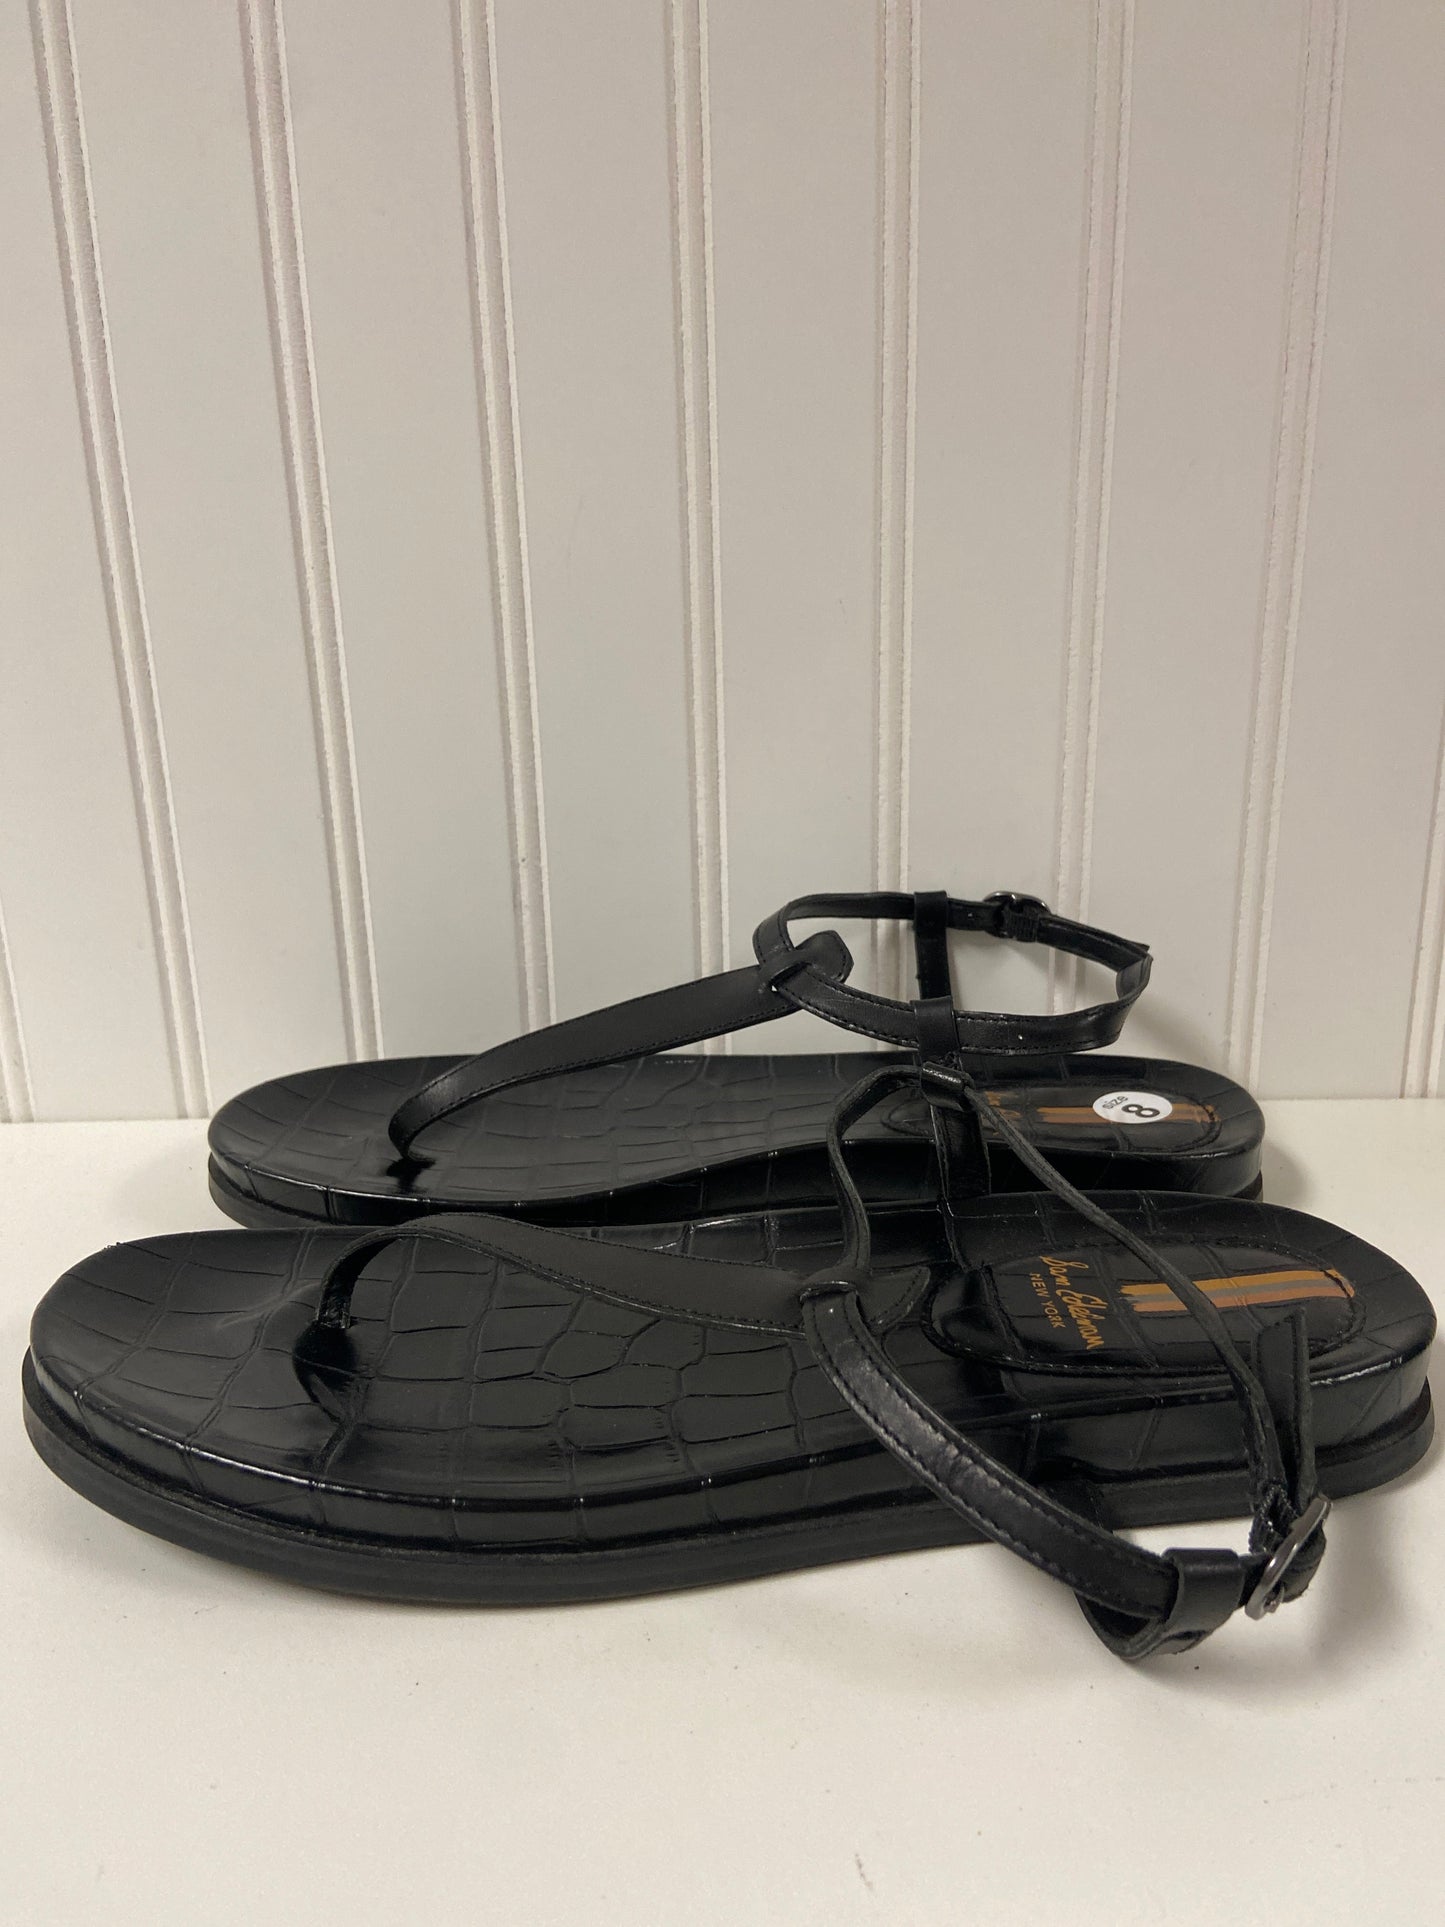 Black Sandals Flats Sam Edelman, Size 8